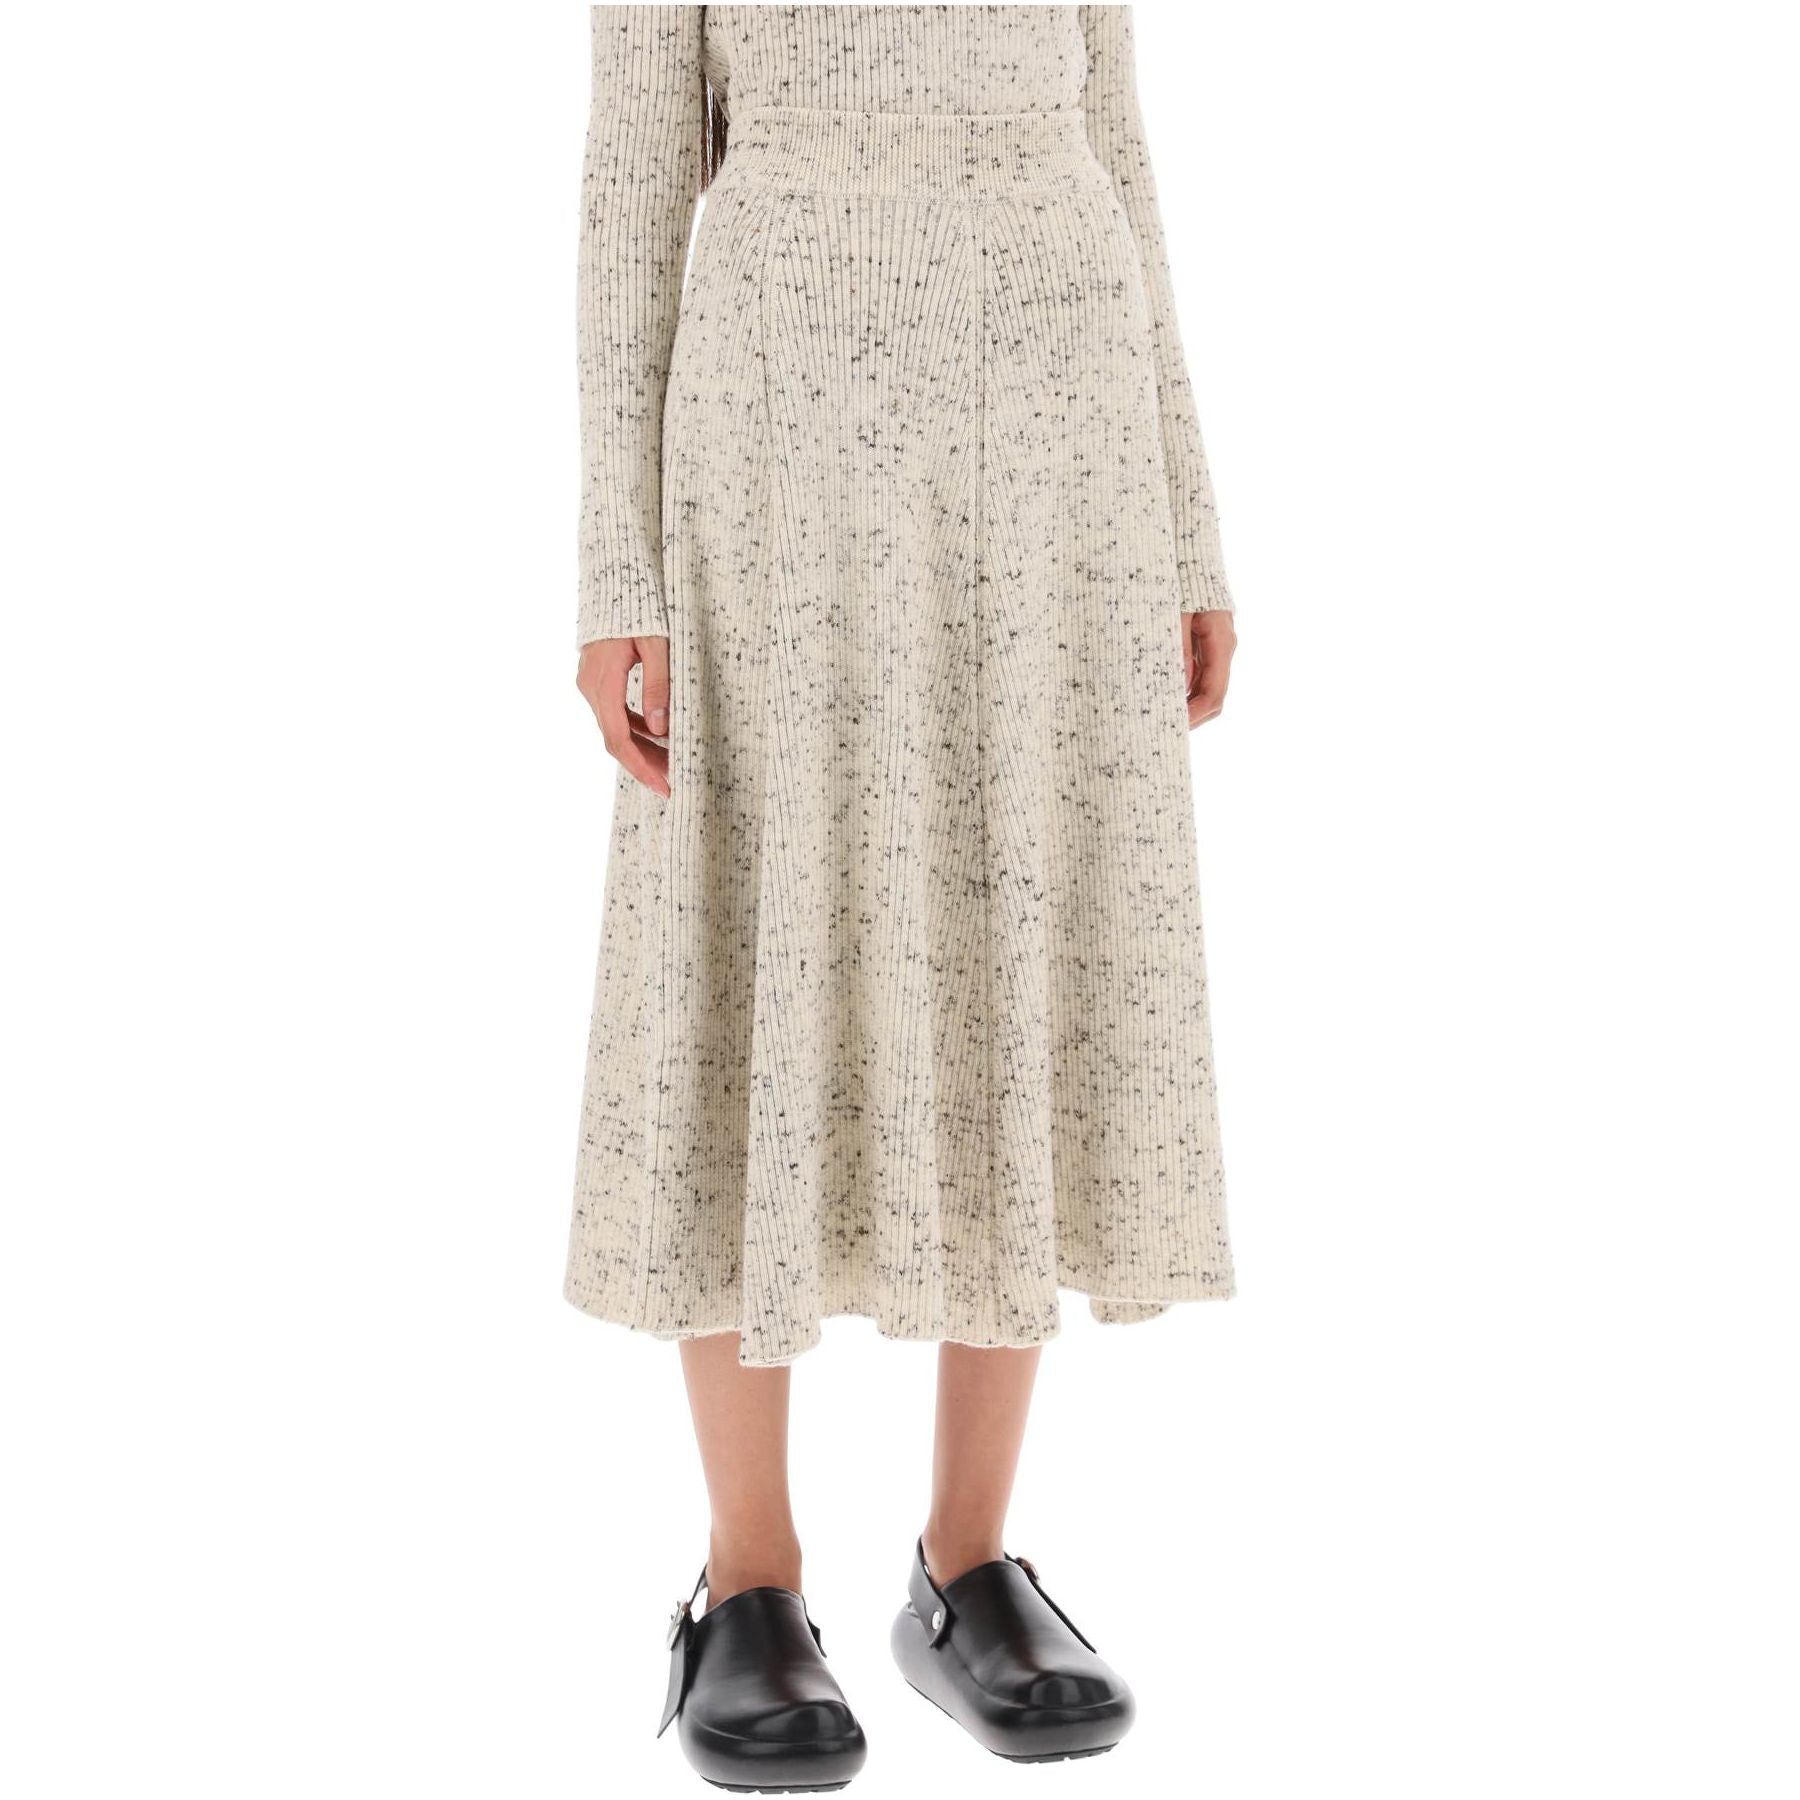 Speckled Wool Midi Skirt